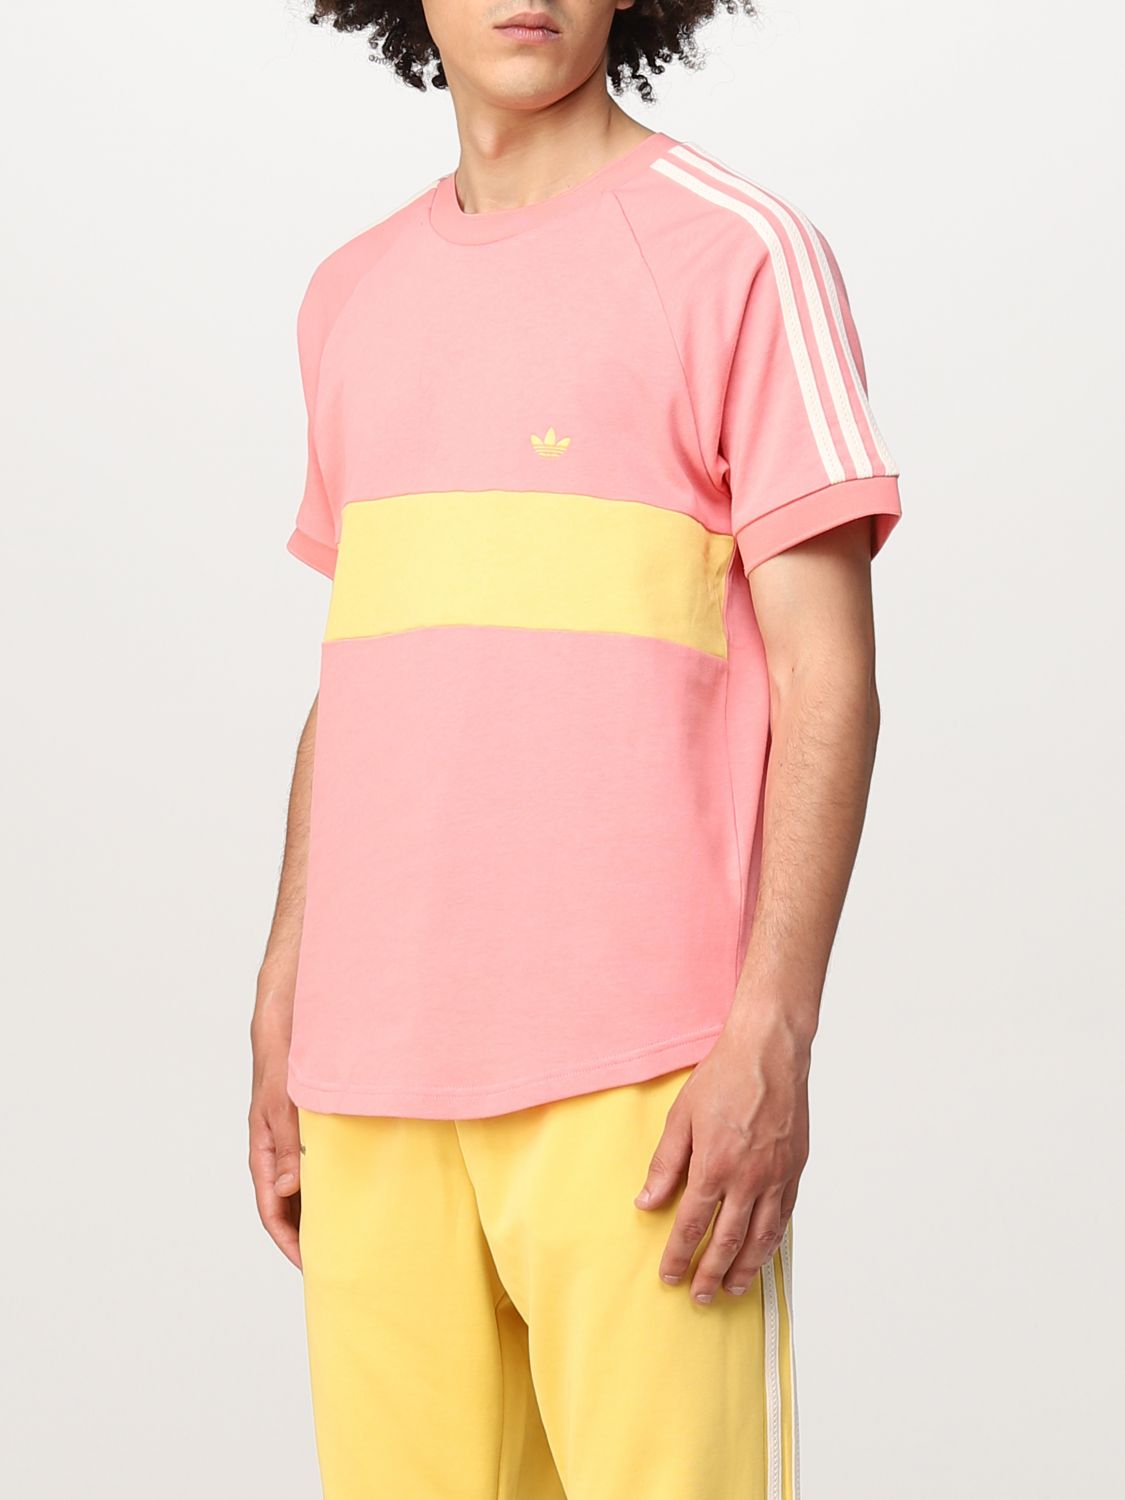 ADIDAS ORIGINALS: Camiseta para hombre, Rosa | Adidas Originals HL8746 línea en GIGLIO.COM